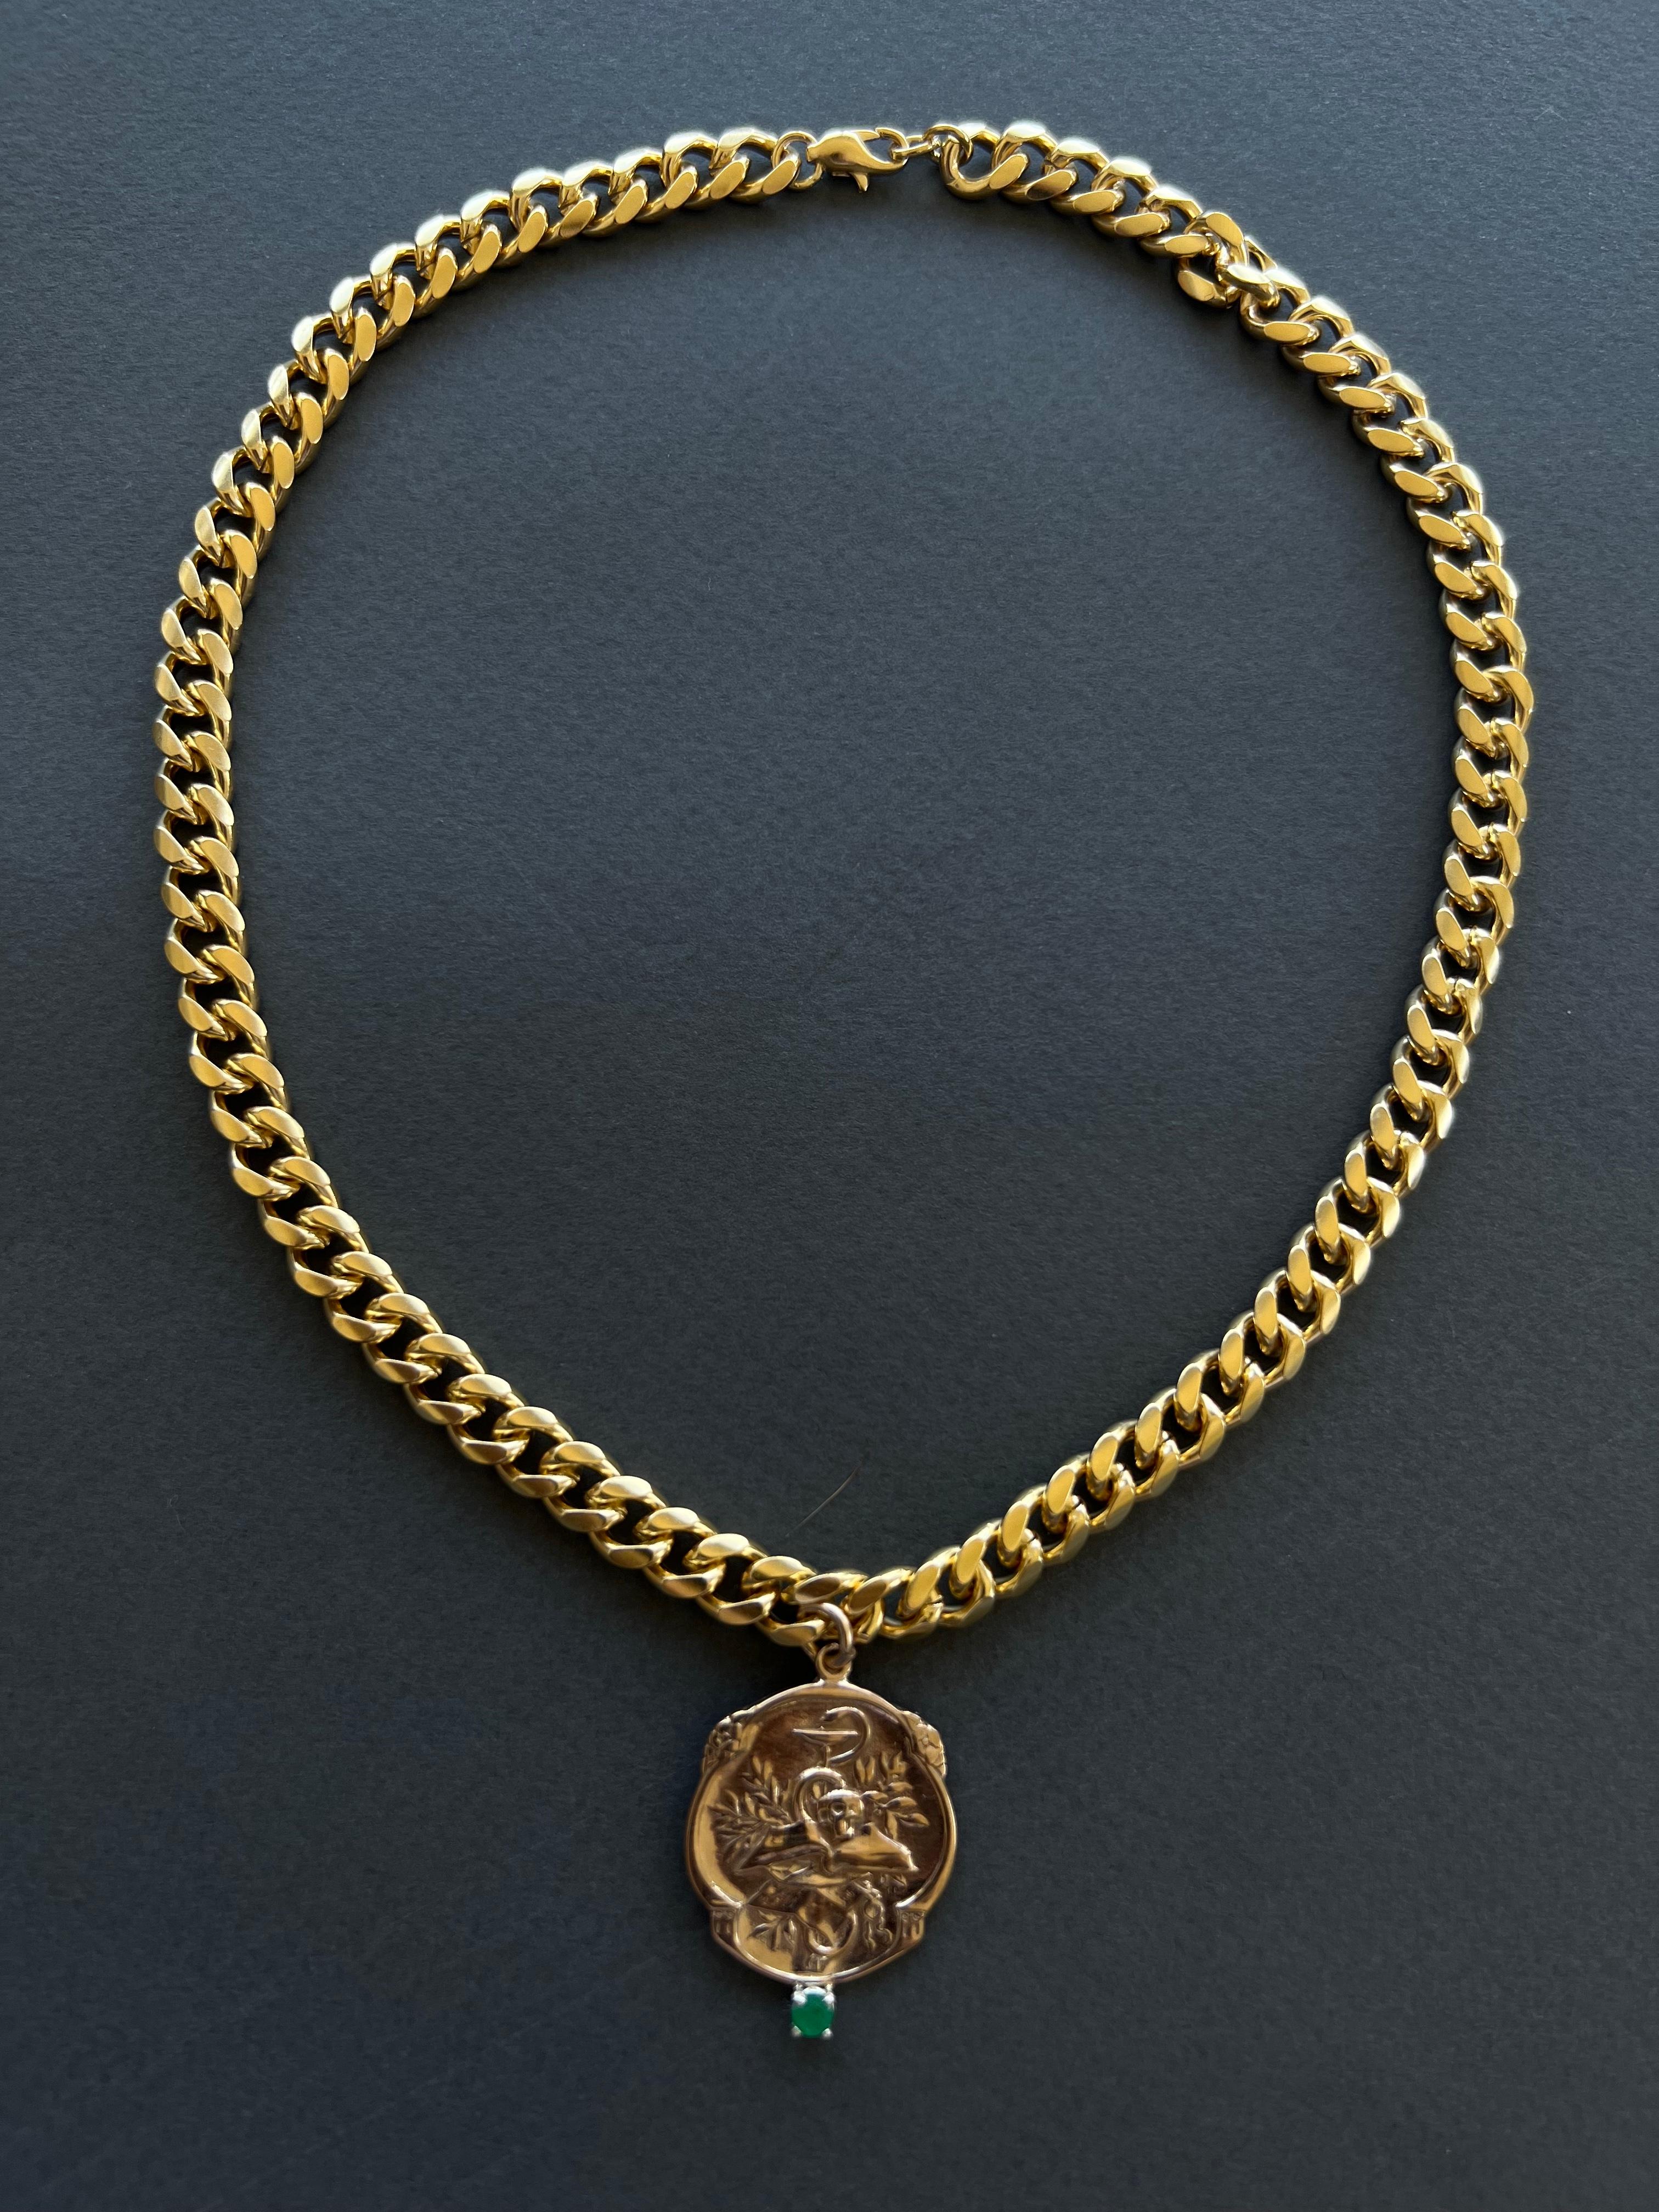 Brilliant Cut Emerald Victorian Style Memento Mori Medal Choker Chain Necklace Skull J Dauphin For Sale